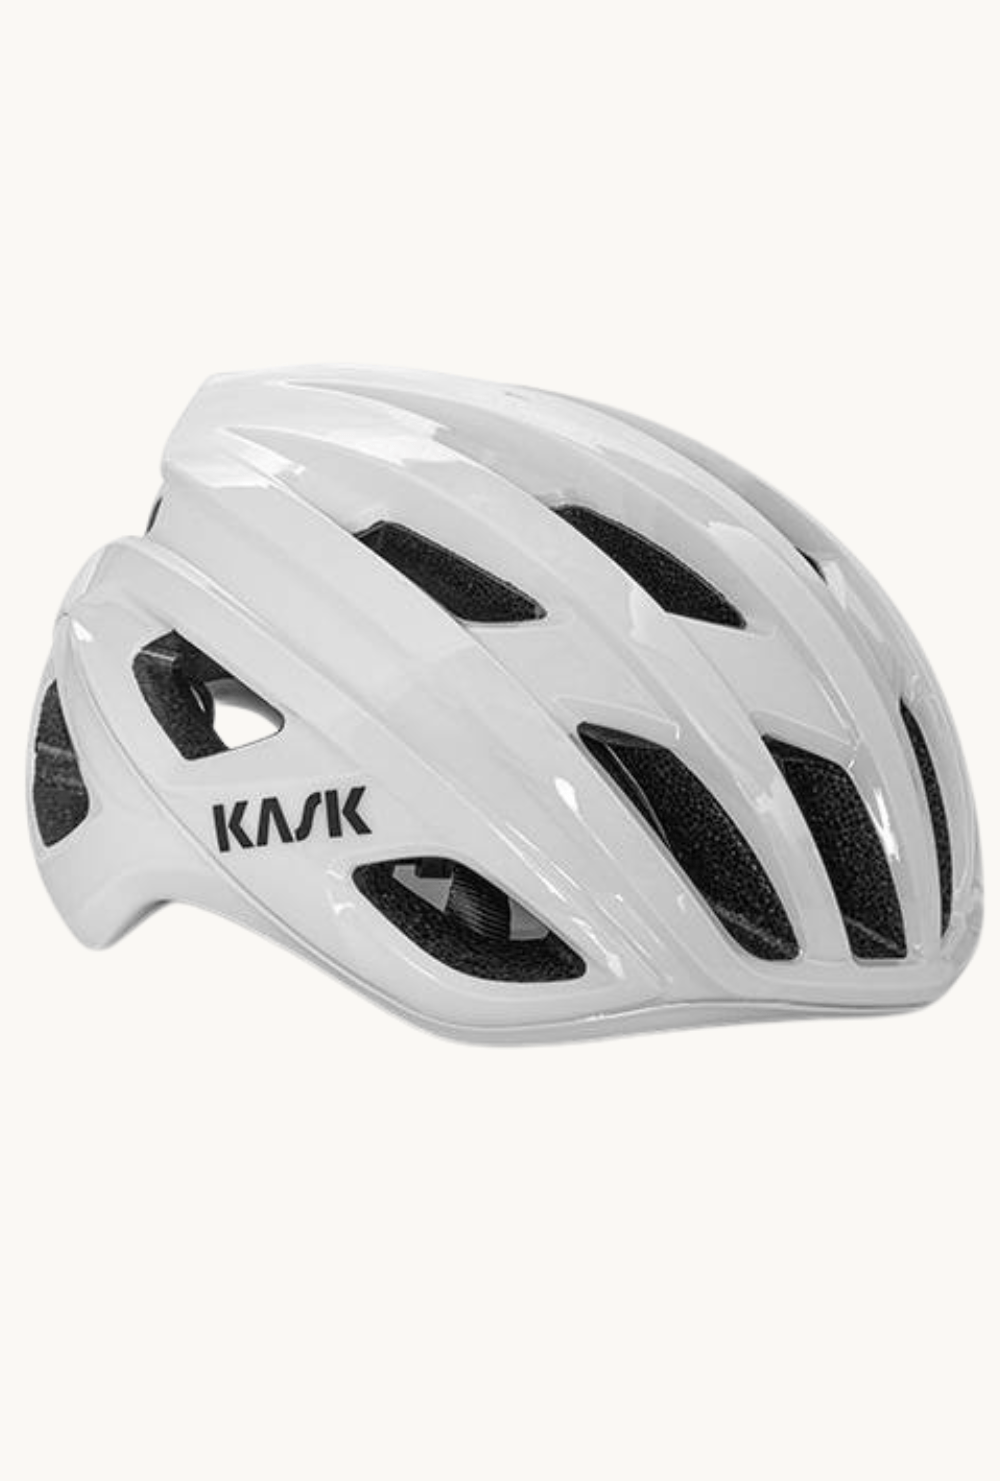 Helmet - Kask Mojito³ WhiteMedium / White from Pearson Cycles